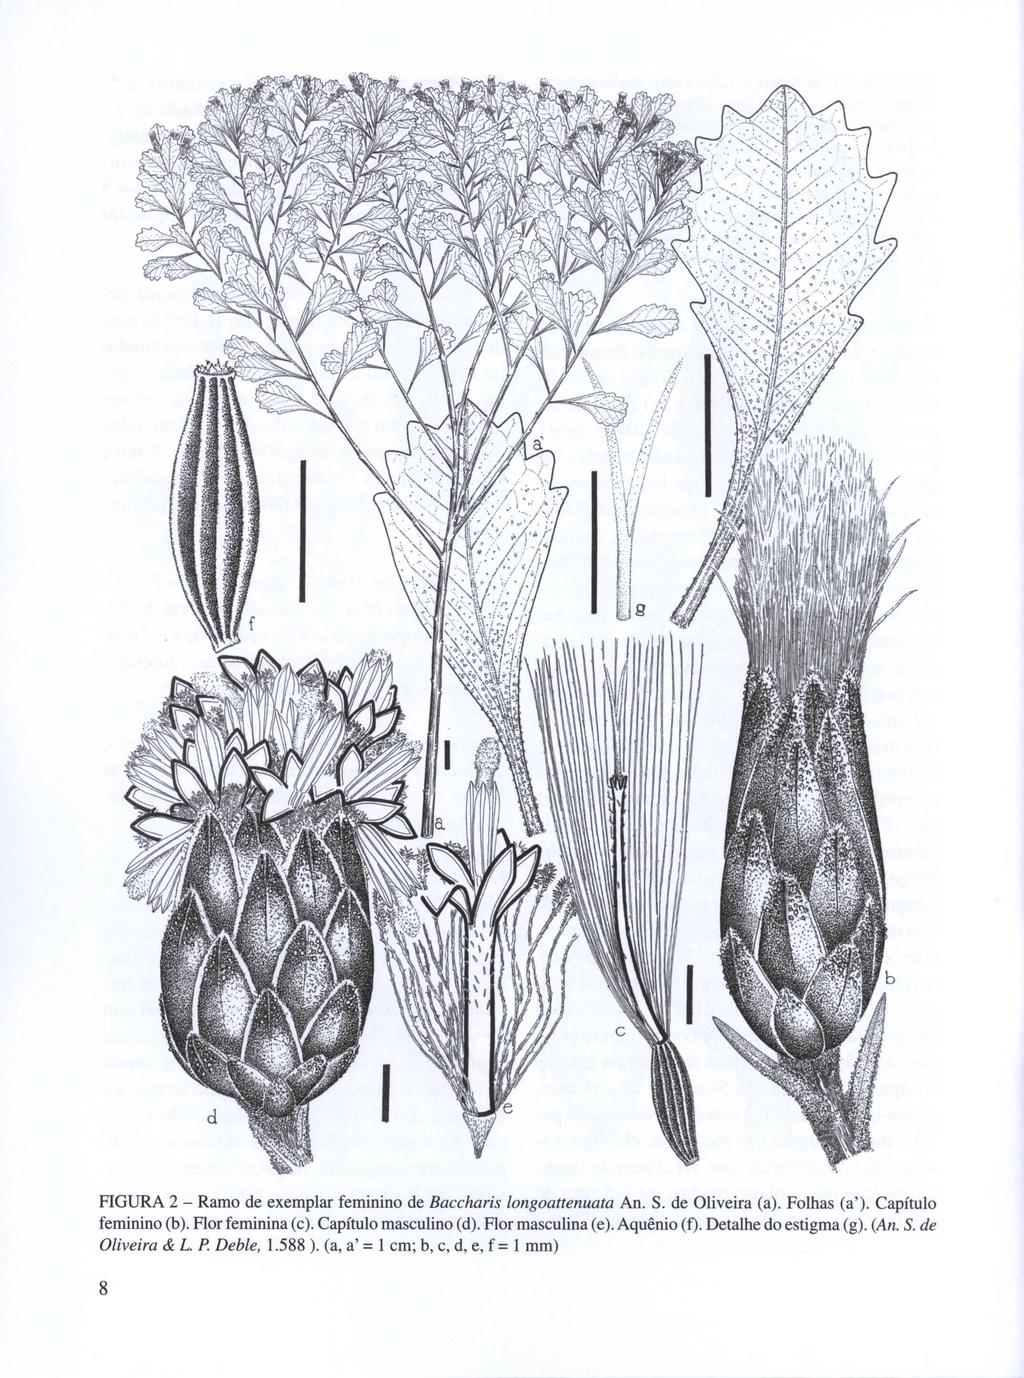 FIGURA 2 - Ramo de exemplar feminino de Baccharis longoattenuata An. S. de Oliveira (a). Folhas (a'). Capítulo feminino (b). Flor feminina (c).